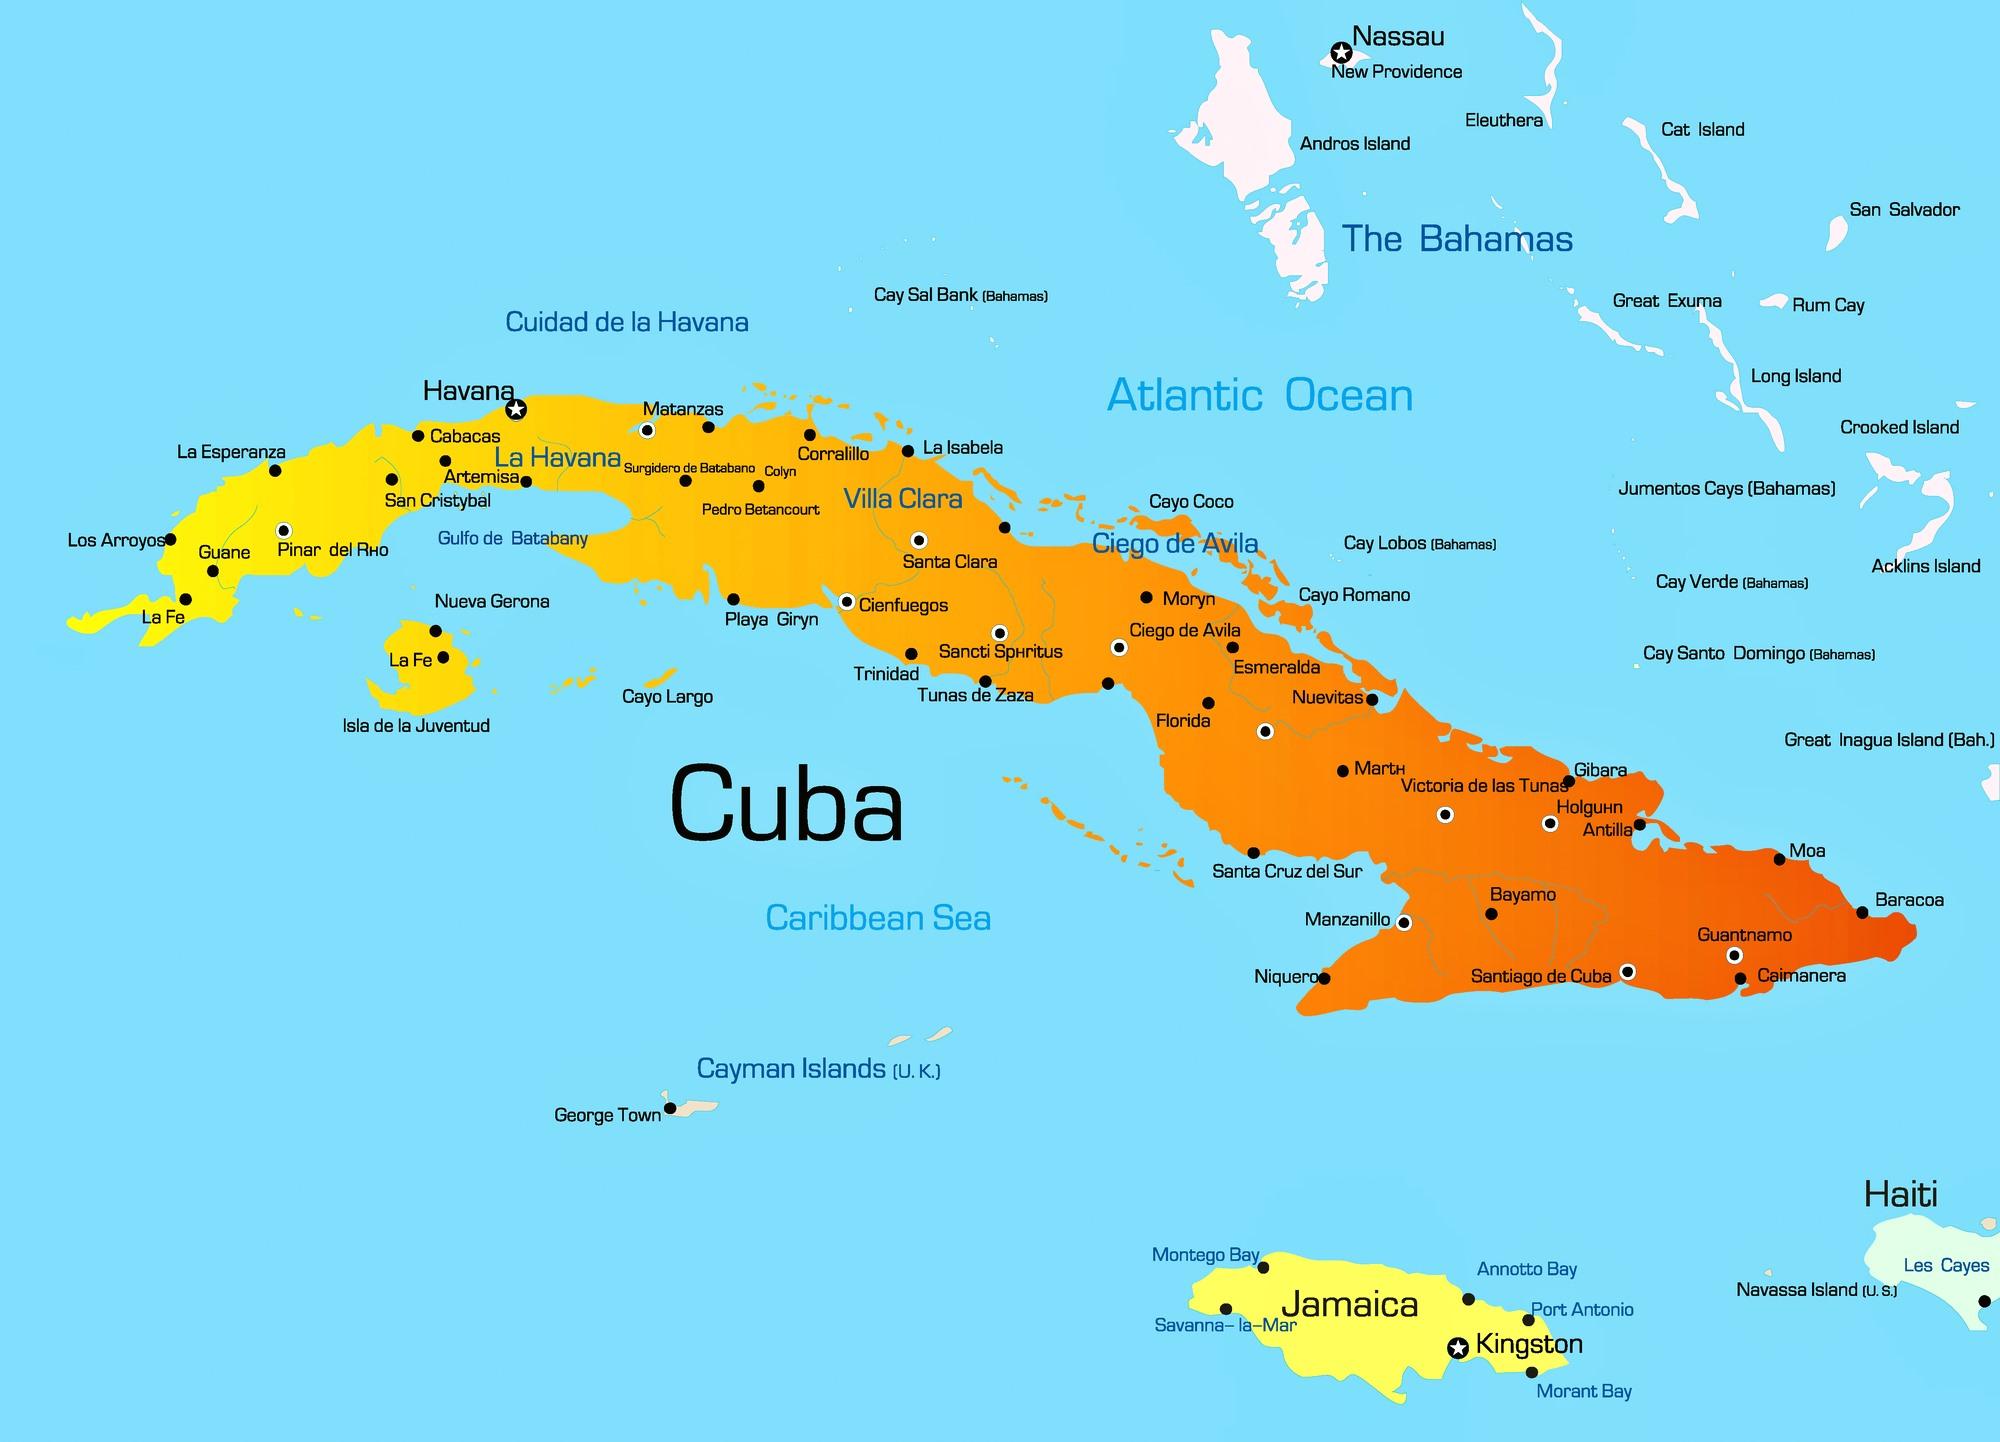 Map of Cuba cities: major cities and capital of Cuba